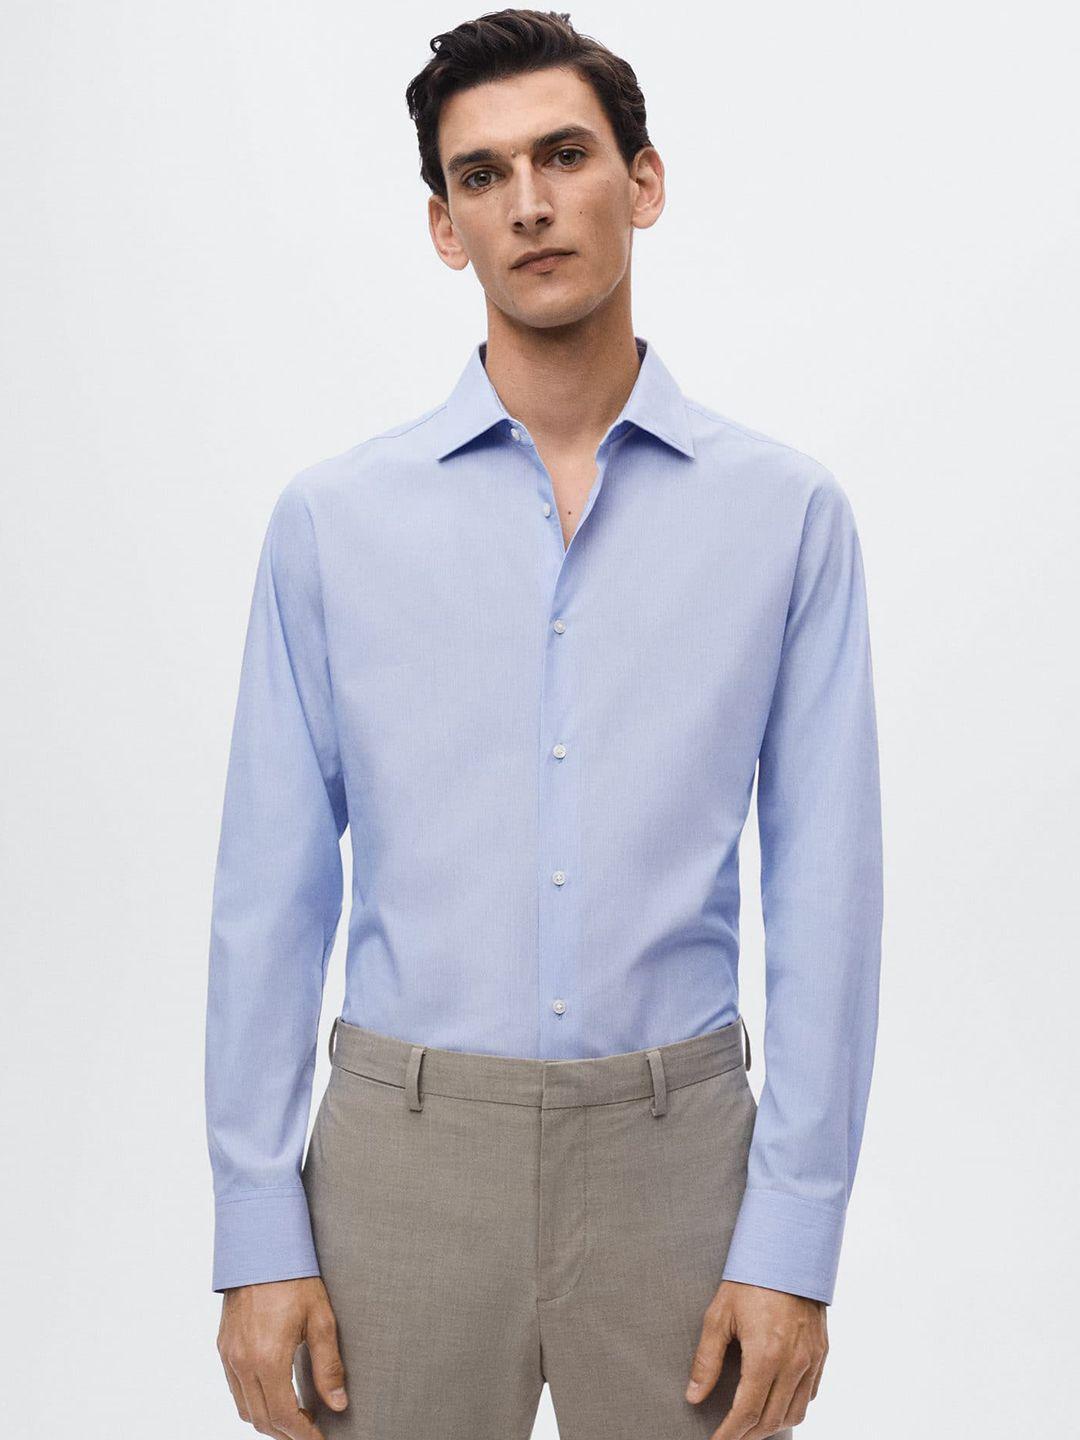 mango man blue solid cotton formal shirt